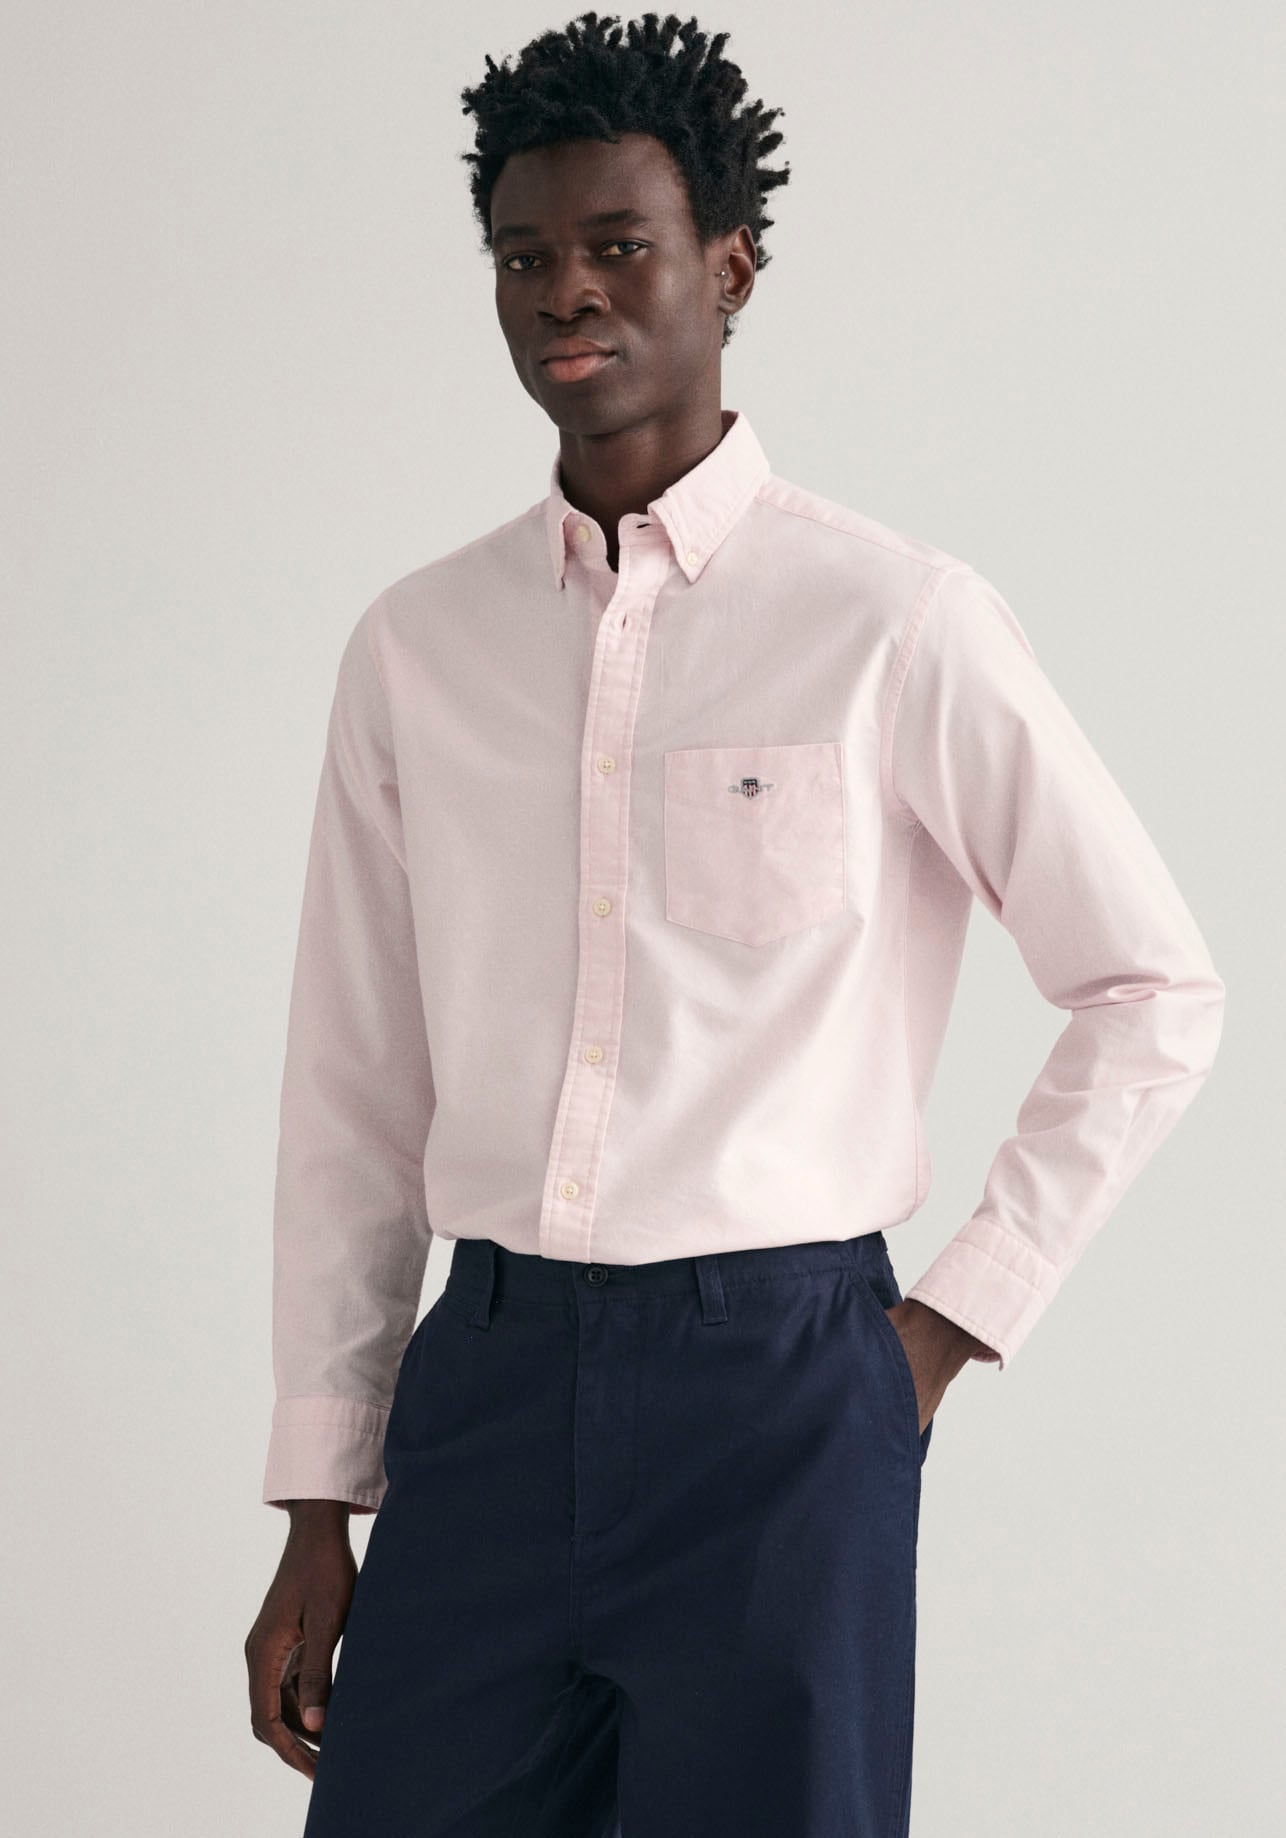 Gant Businesshemd »Regular Fit Oxford Hemd strukturiert langlebig dicker« von Gant